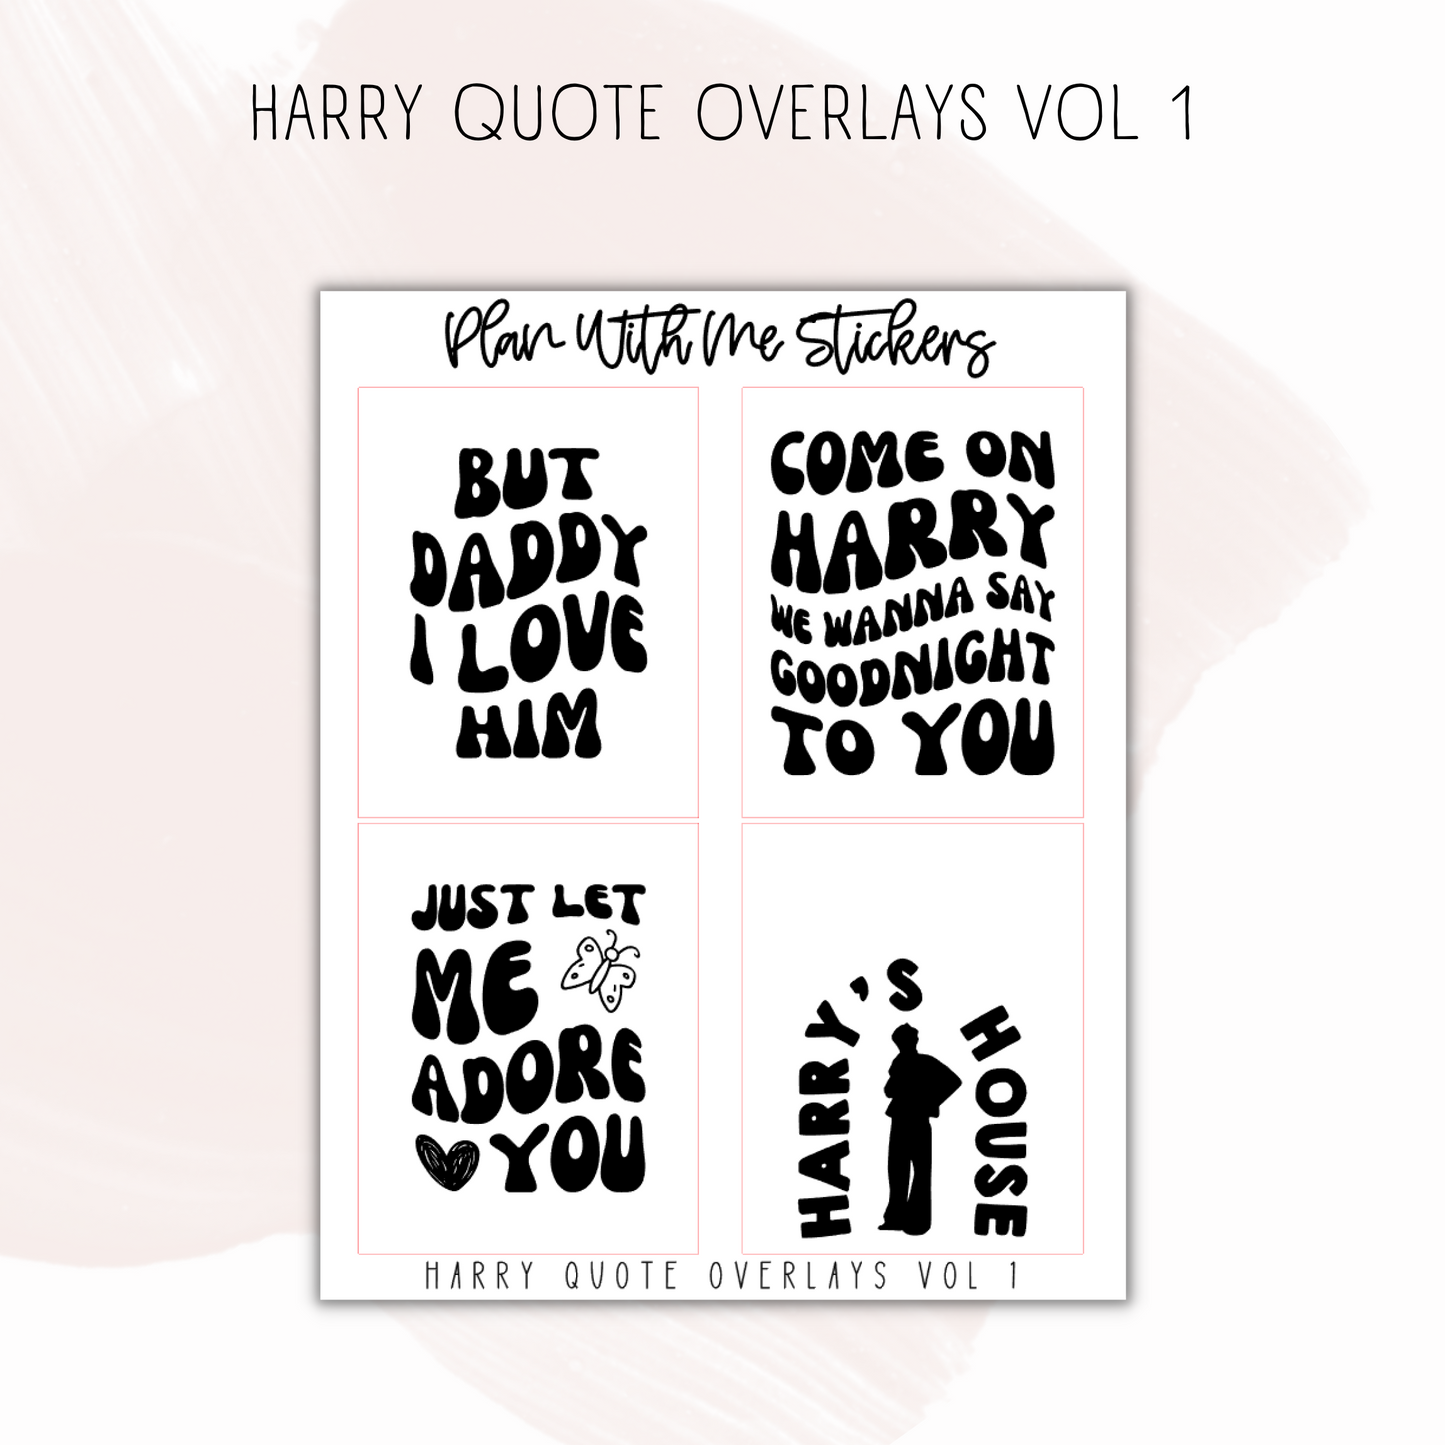 Harry Quote Overlays Vol 1